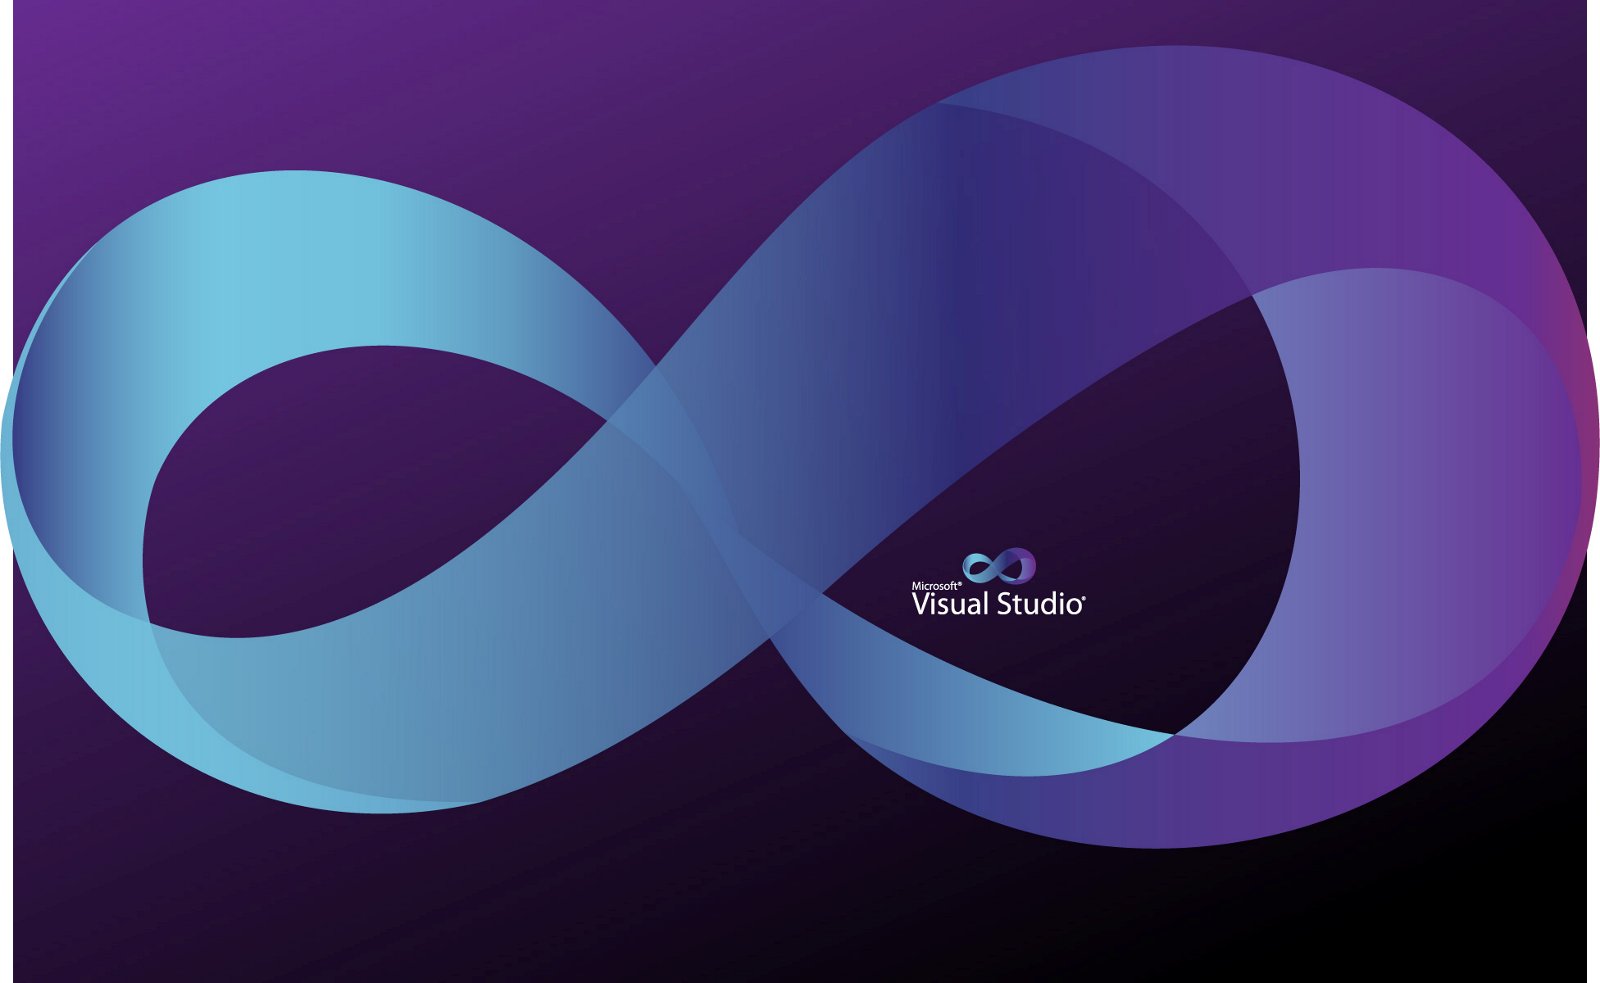 Wallpaper Visual Studio Made In Venezuela Site Home